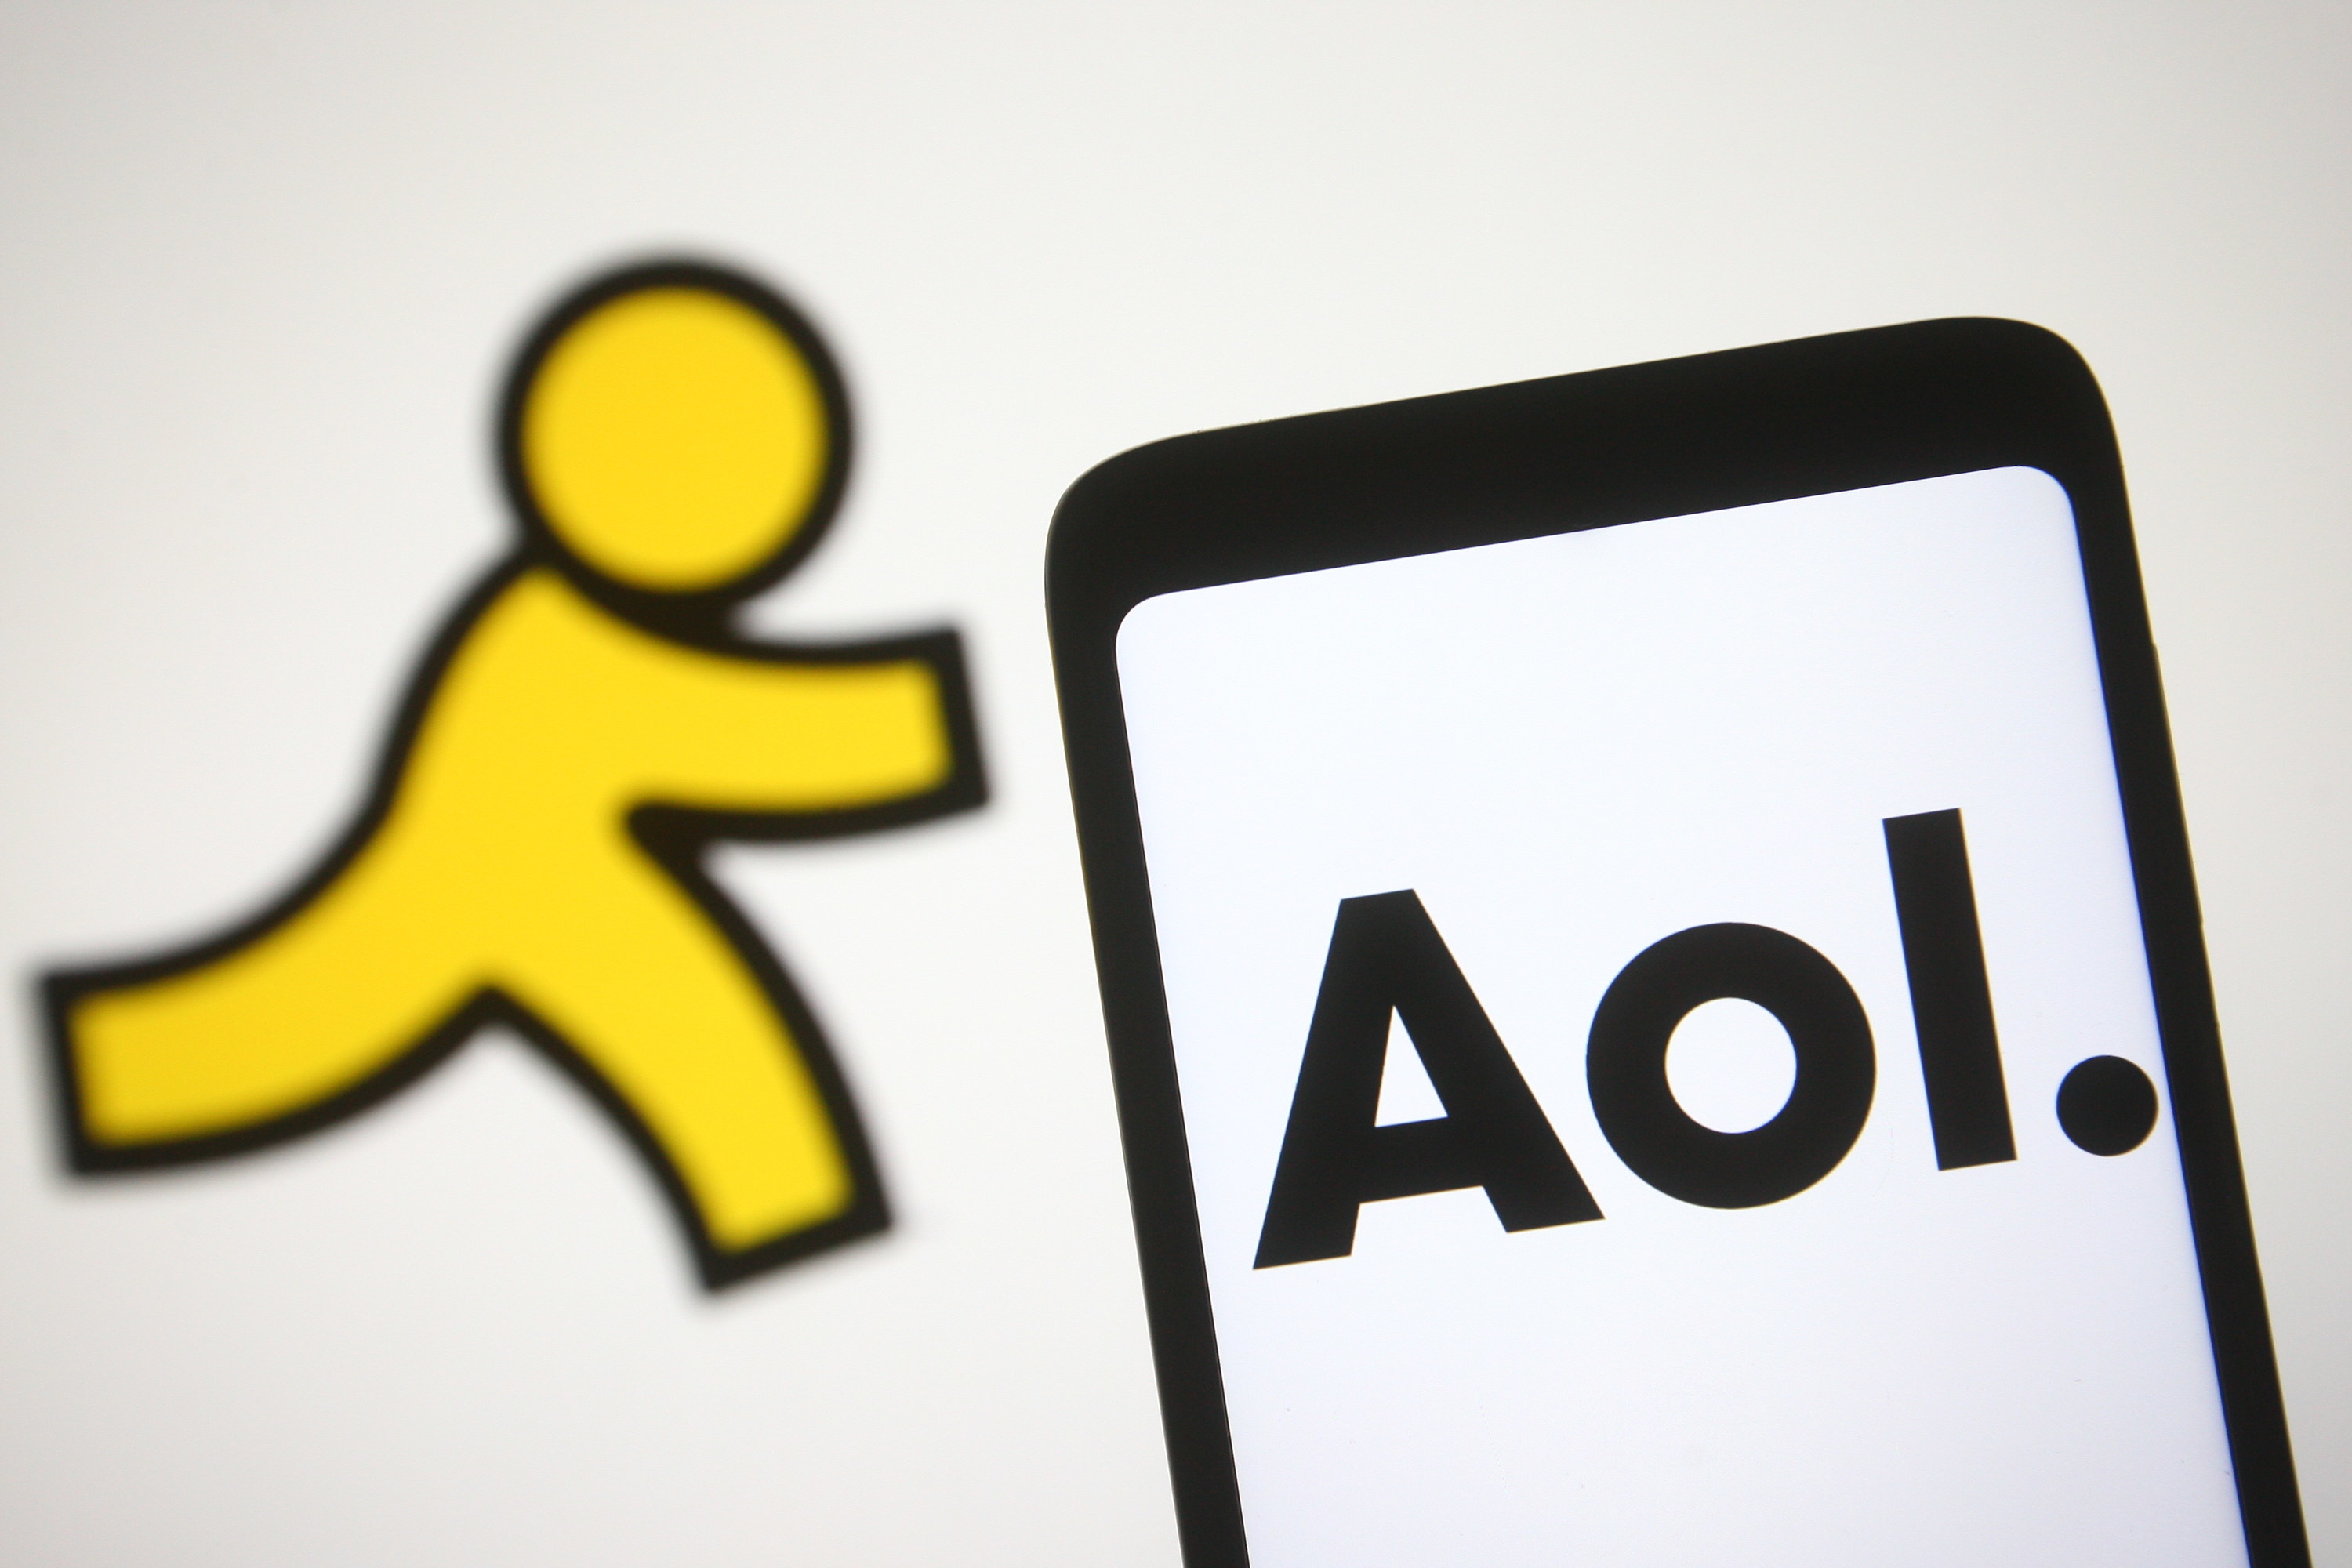 The AOL logo